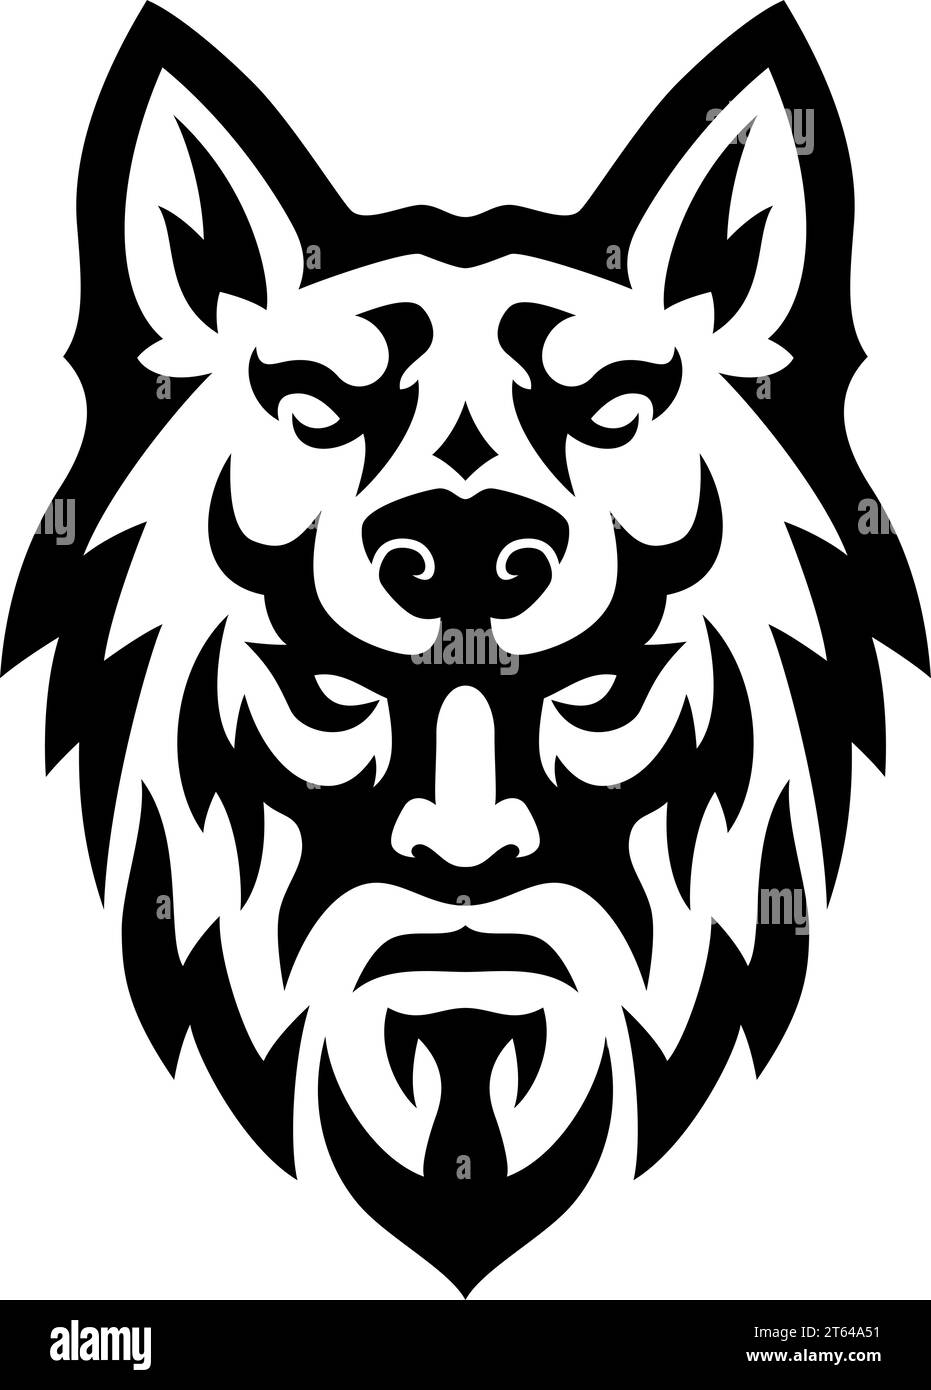 The Warrior Wearing Wolf Head Skin Tattoo Design Stock Vector